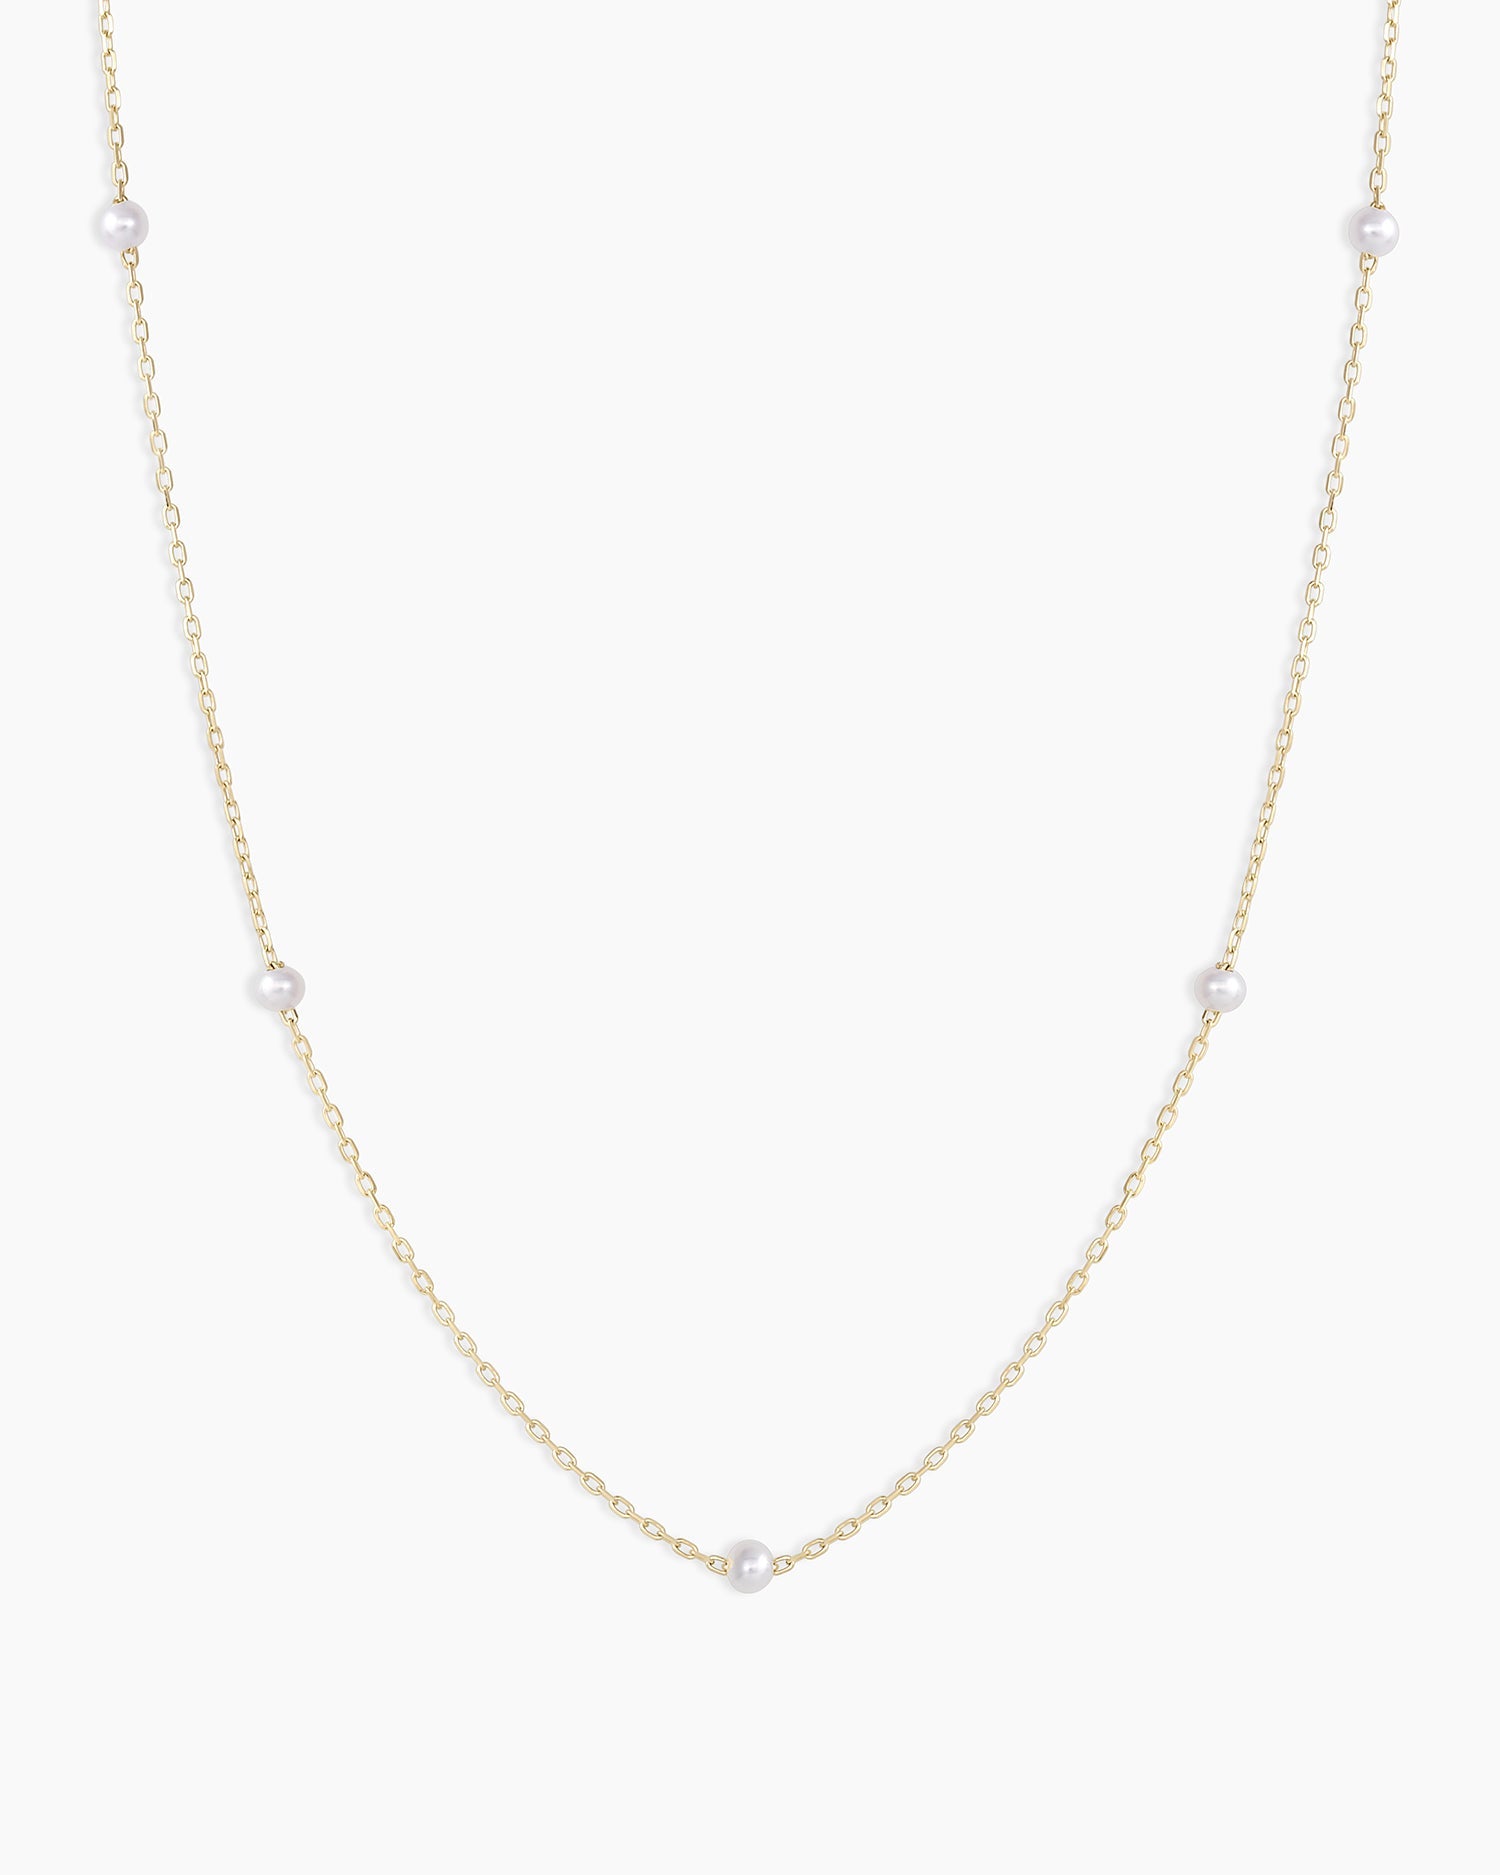 925 Sterling Silver White Pearls Pendant Set – VOYLLA